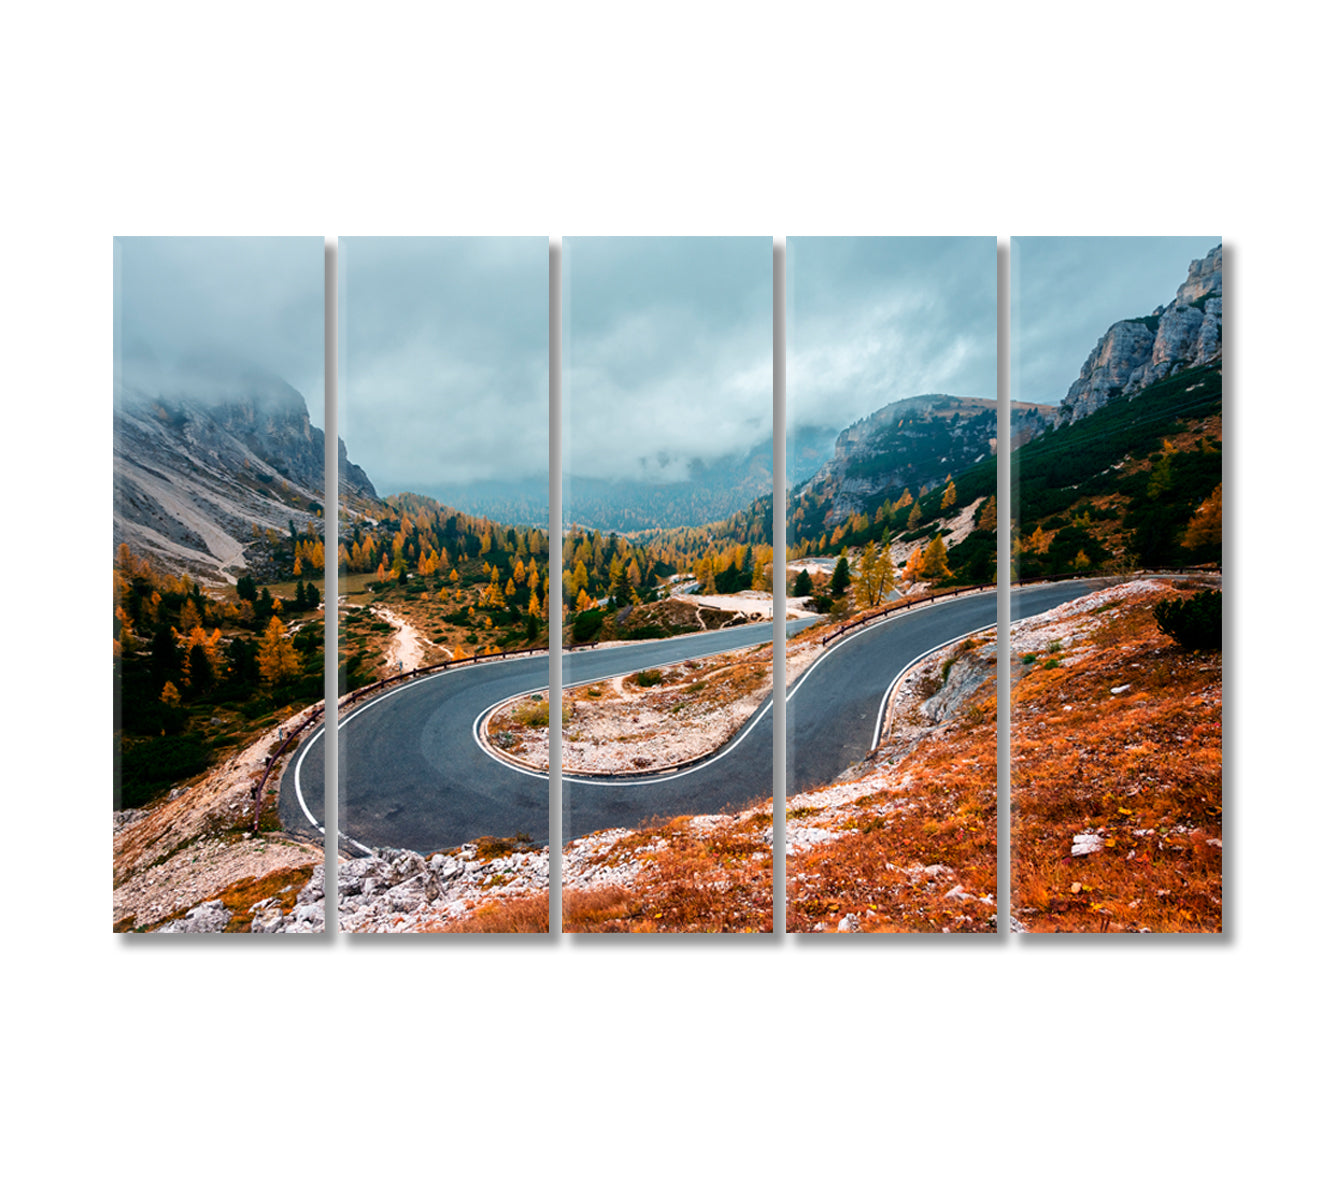 Winding Mountains Road of Lavaredo in Tre Cime di Lavaredo National Park Dolomite Alps Canvas Print-Canvas Print-CetArt-5 Panels-36x24 inches-CetArt